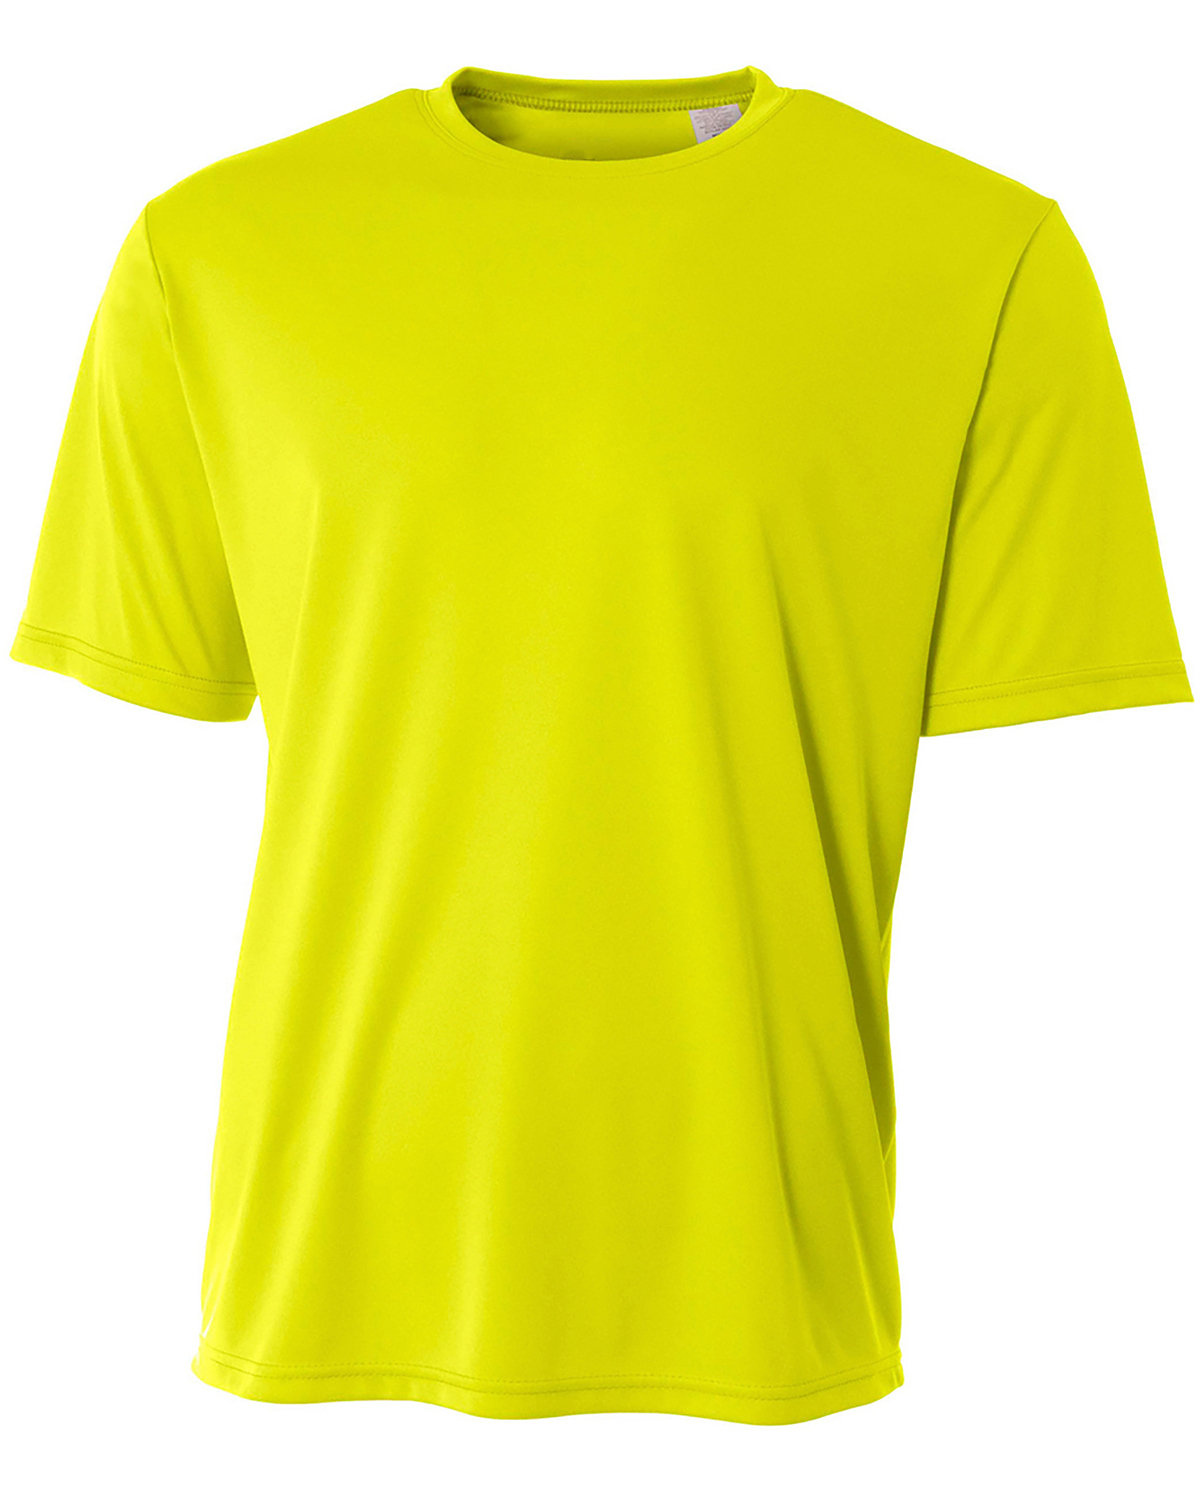 A4 Men's Sprint Performance T-Shirt SAFETY YELLOW 